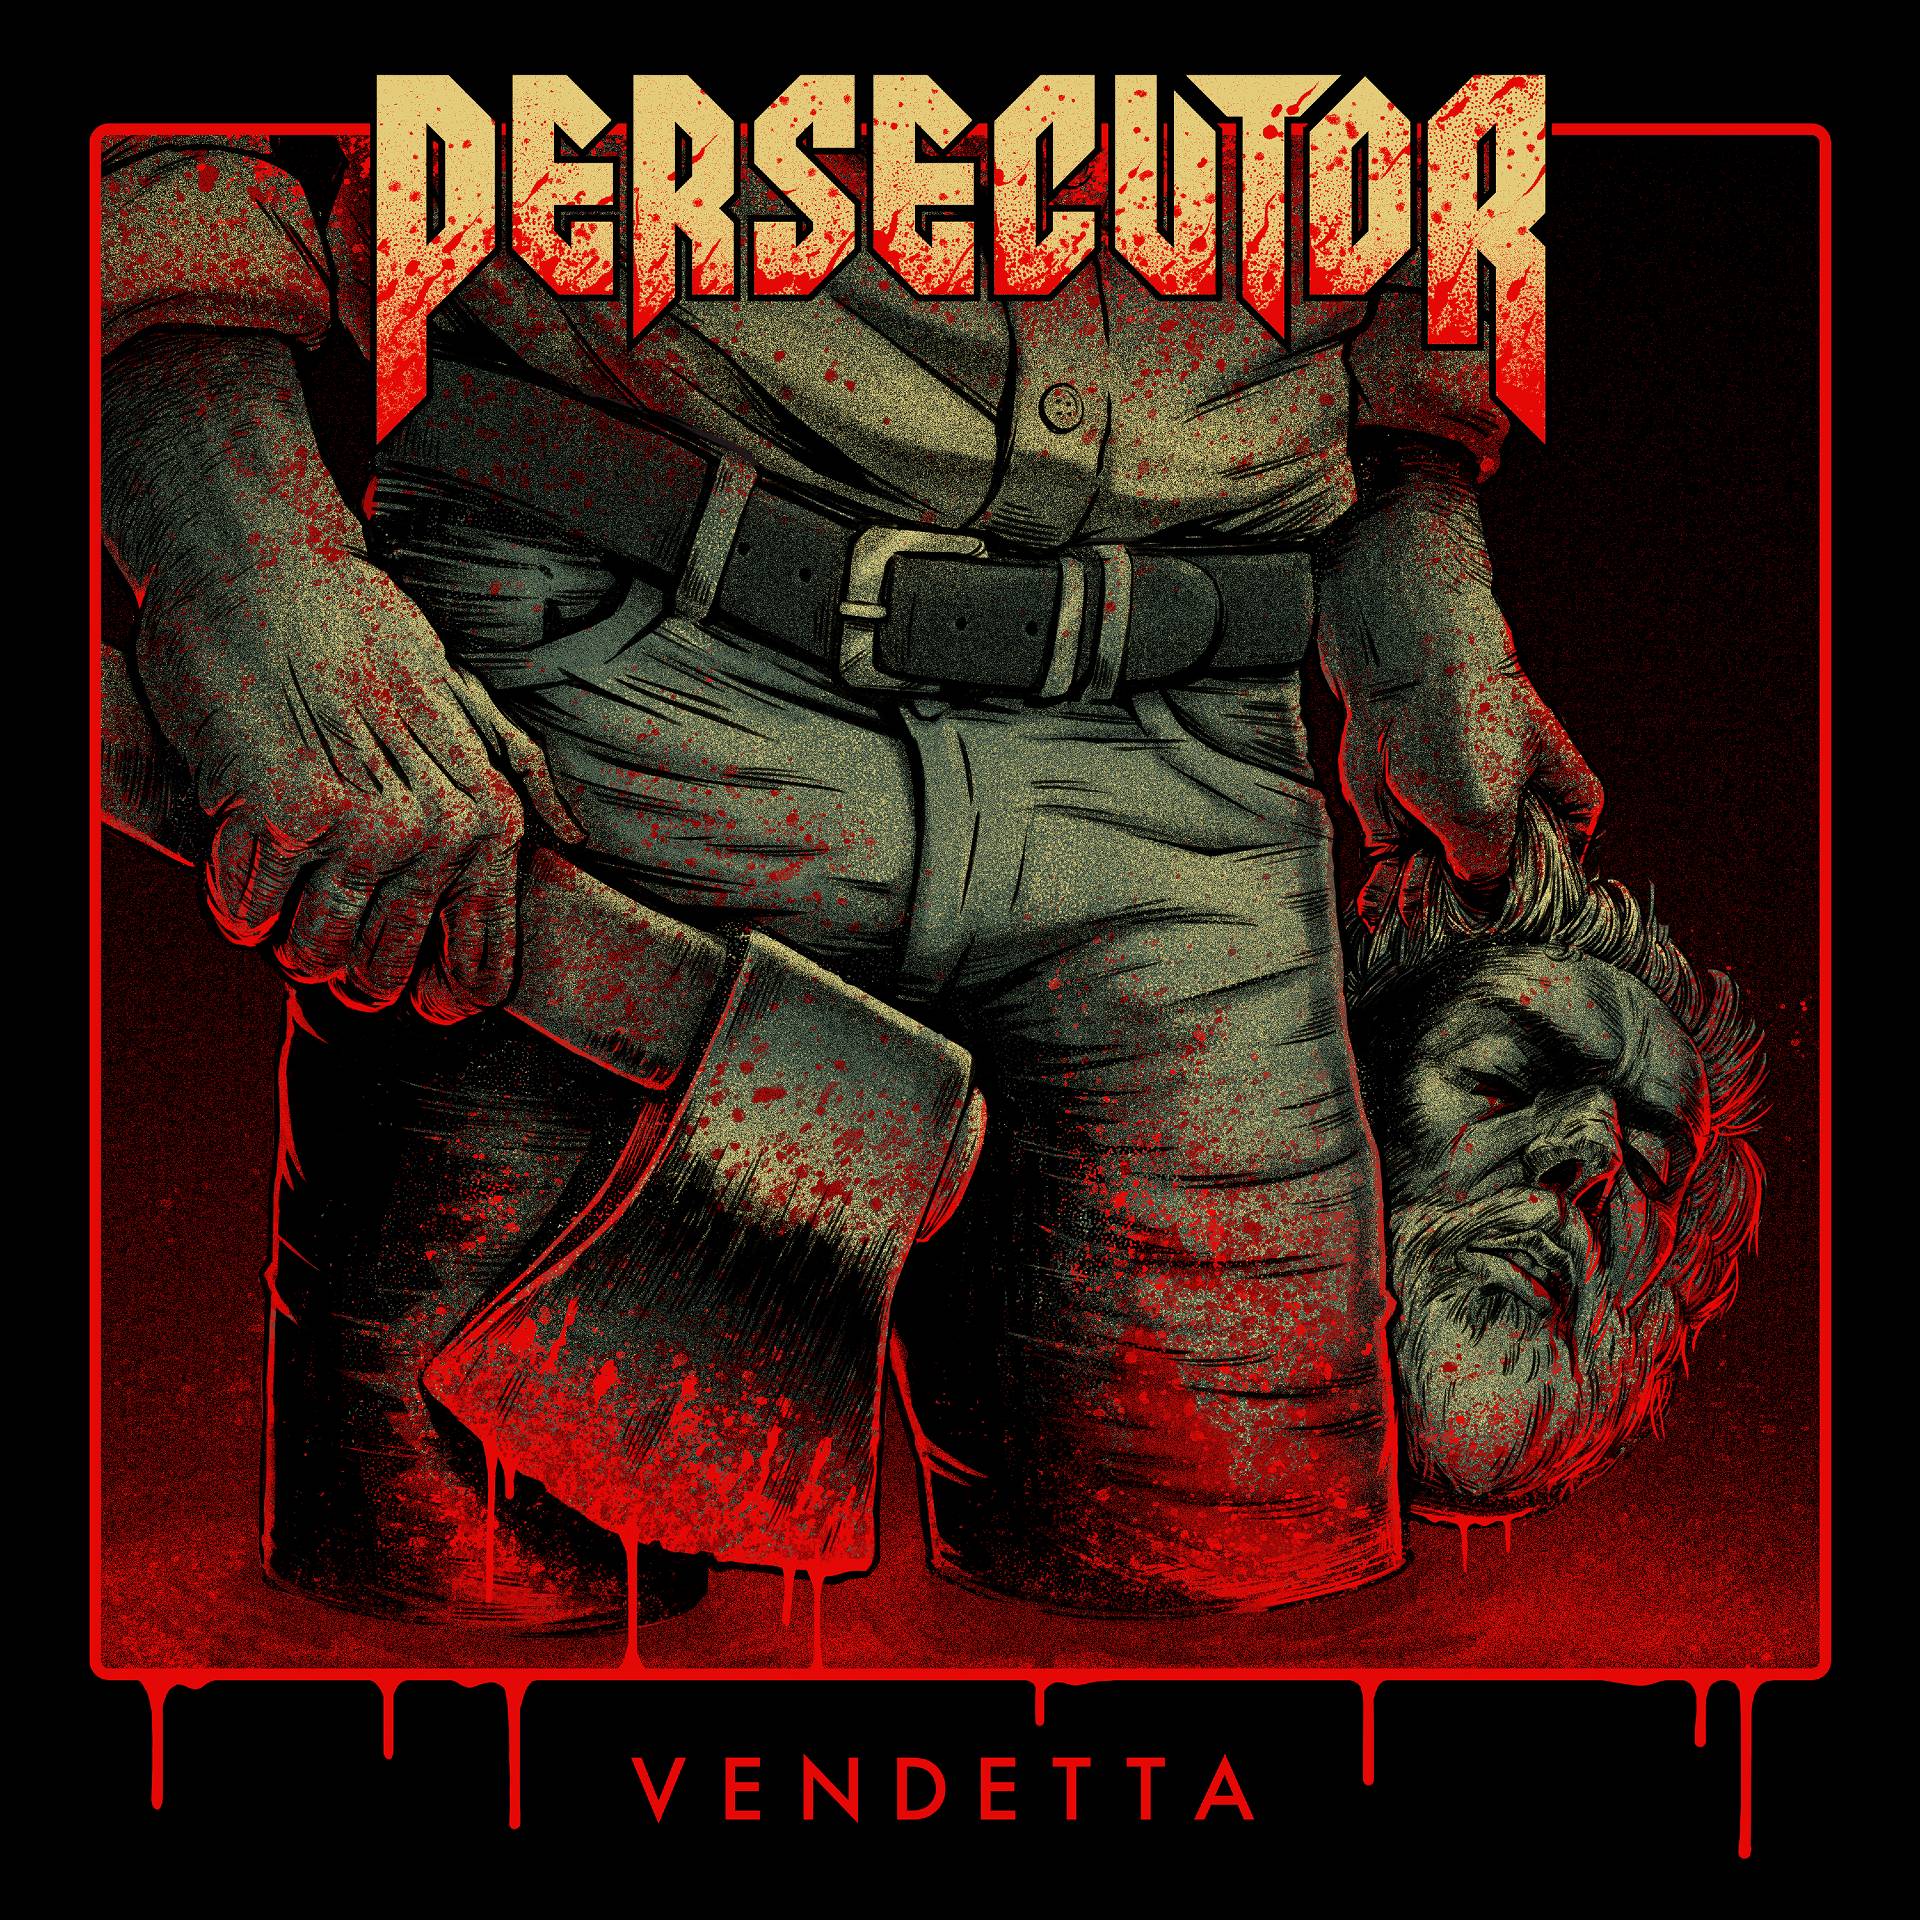 Persecutor ‘Vendetta’ album artwork